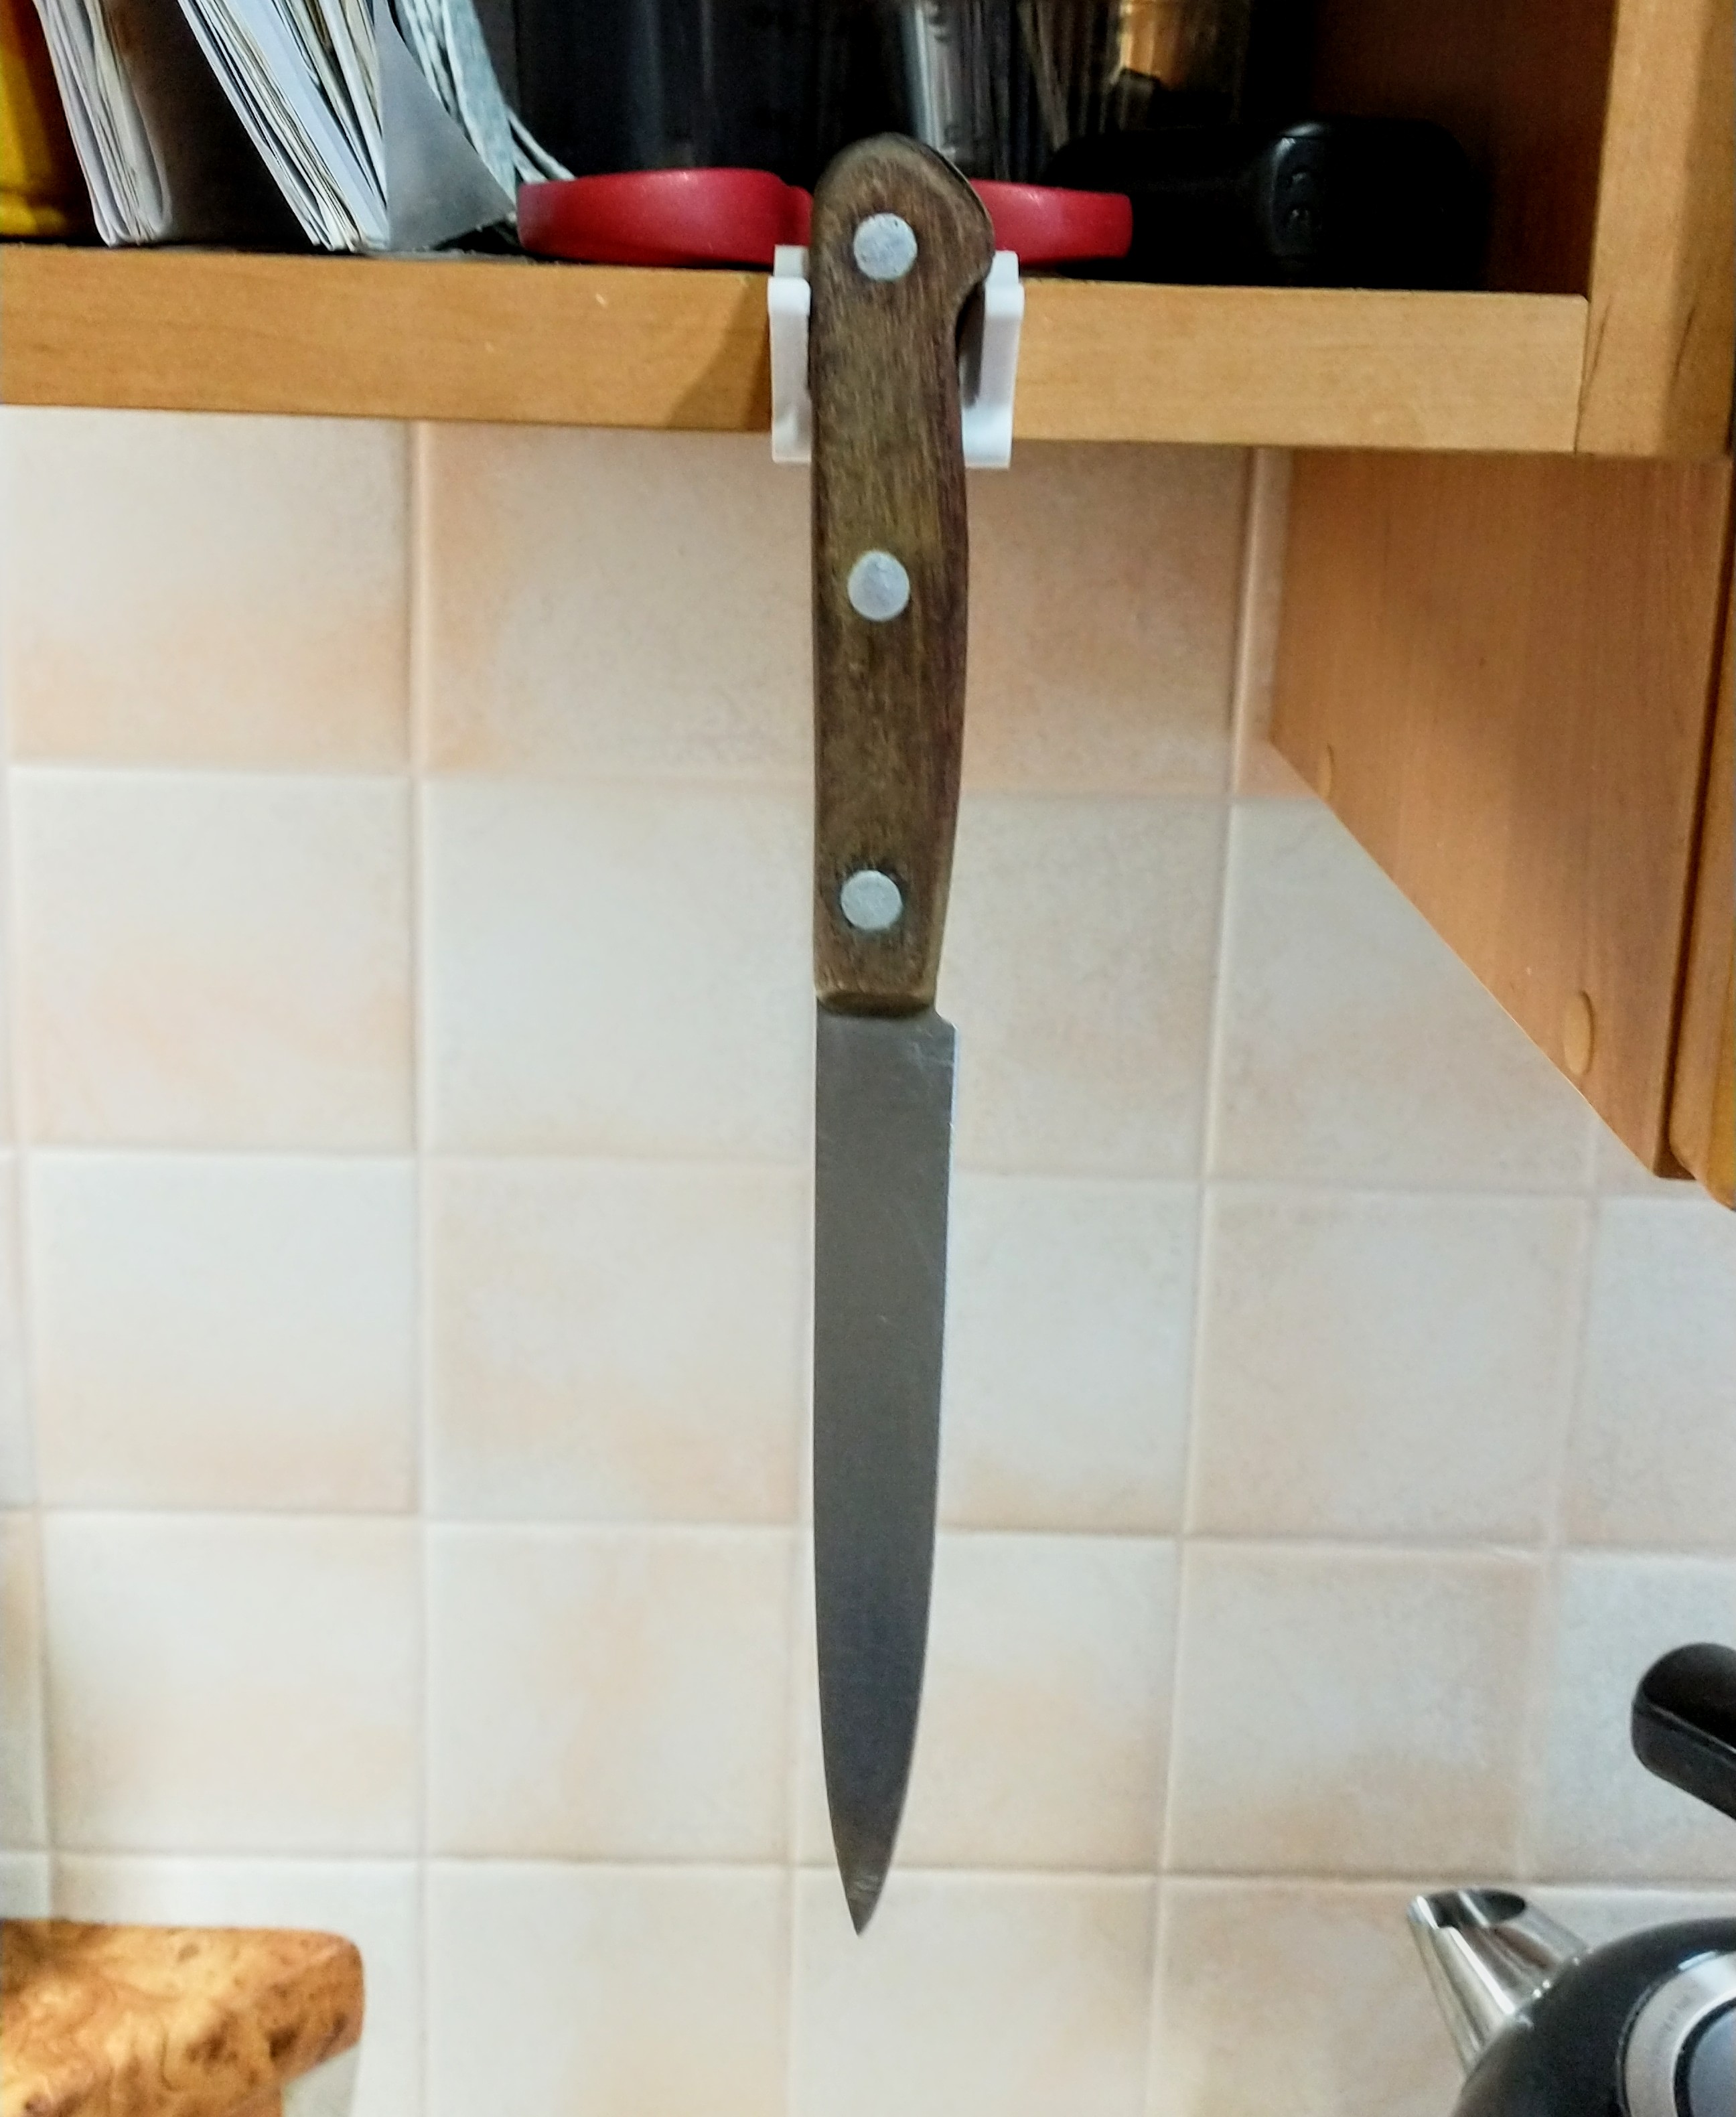 Snap-on-shelf Knife Holder